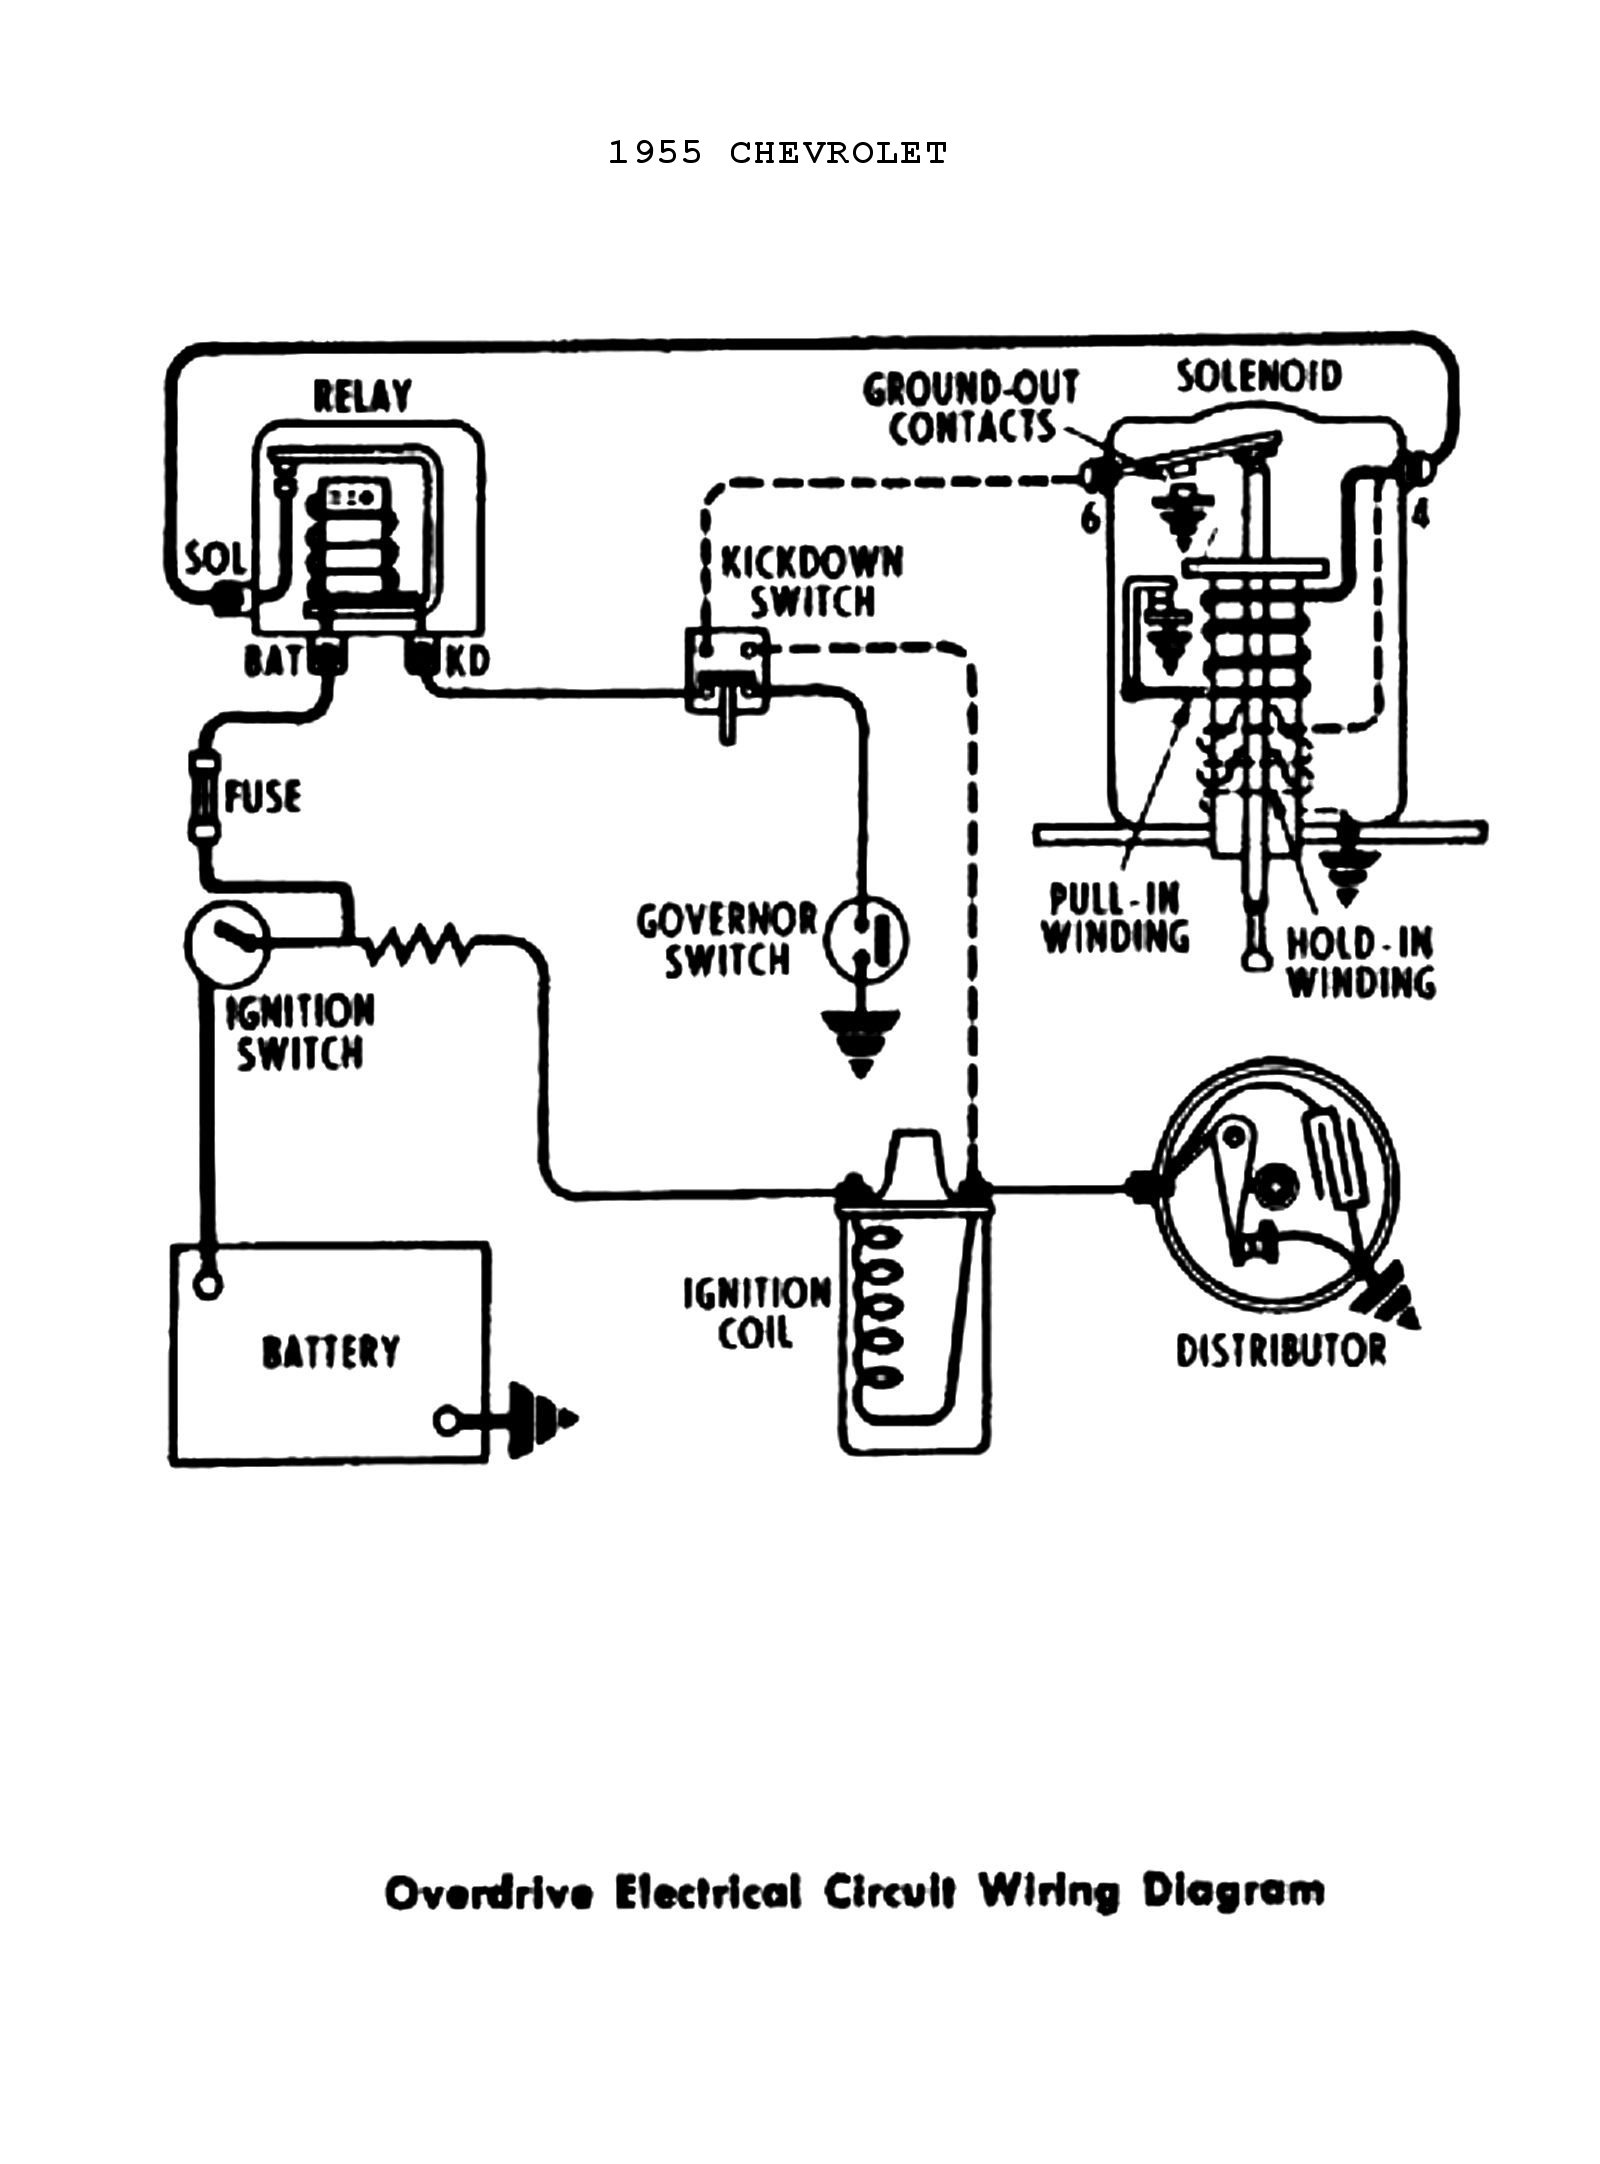 1946 hudson ignition wiring diagram